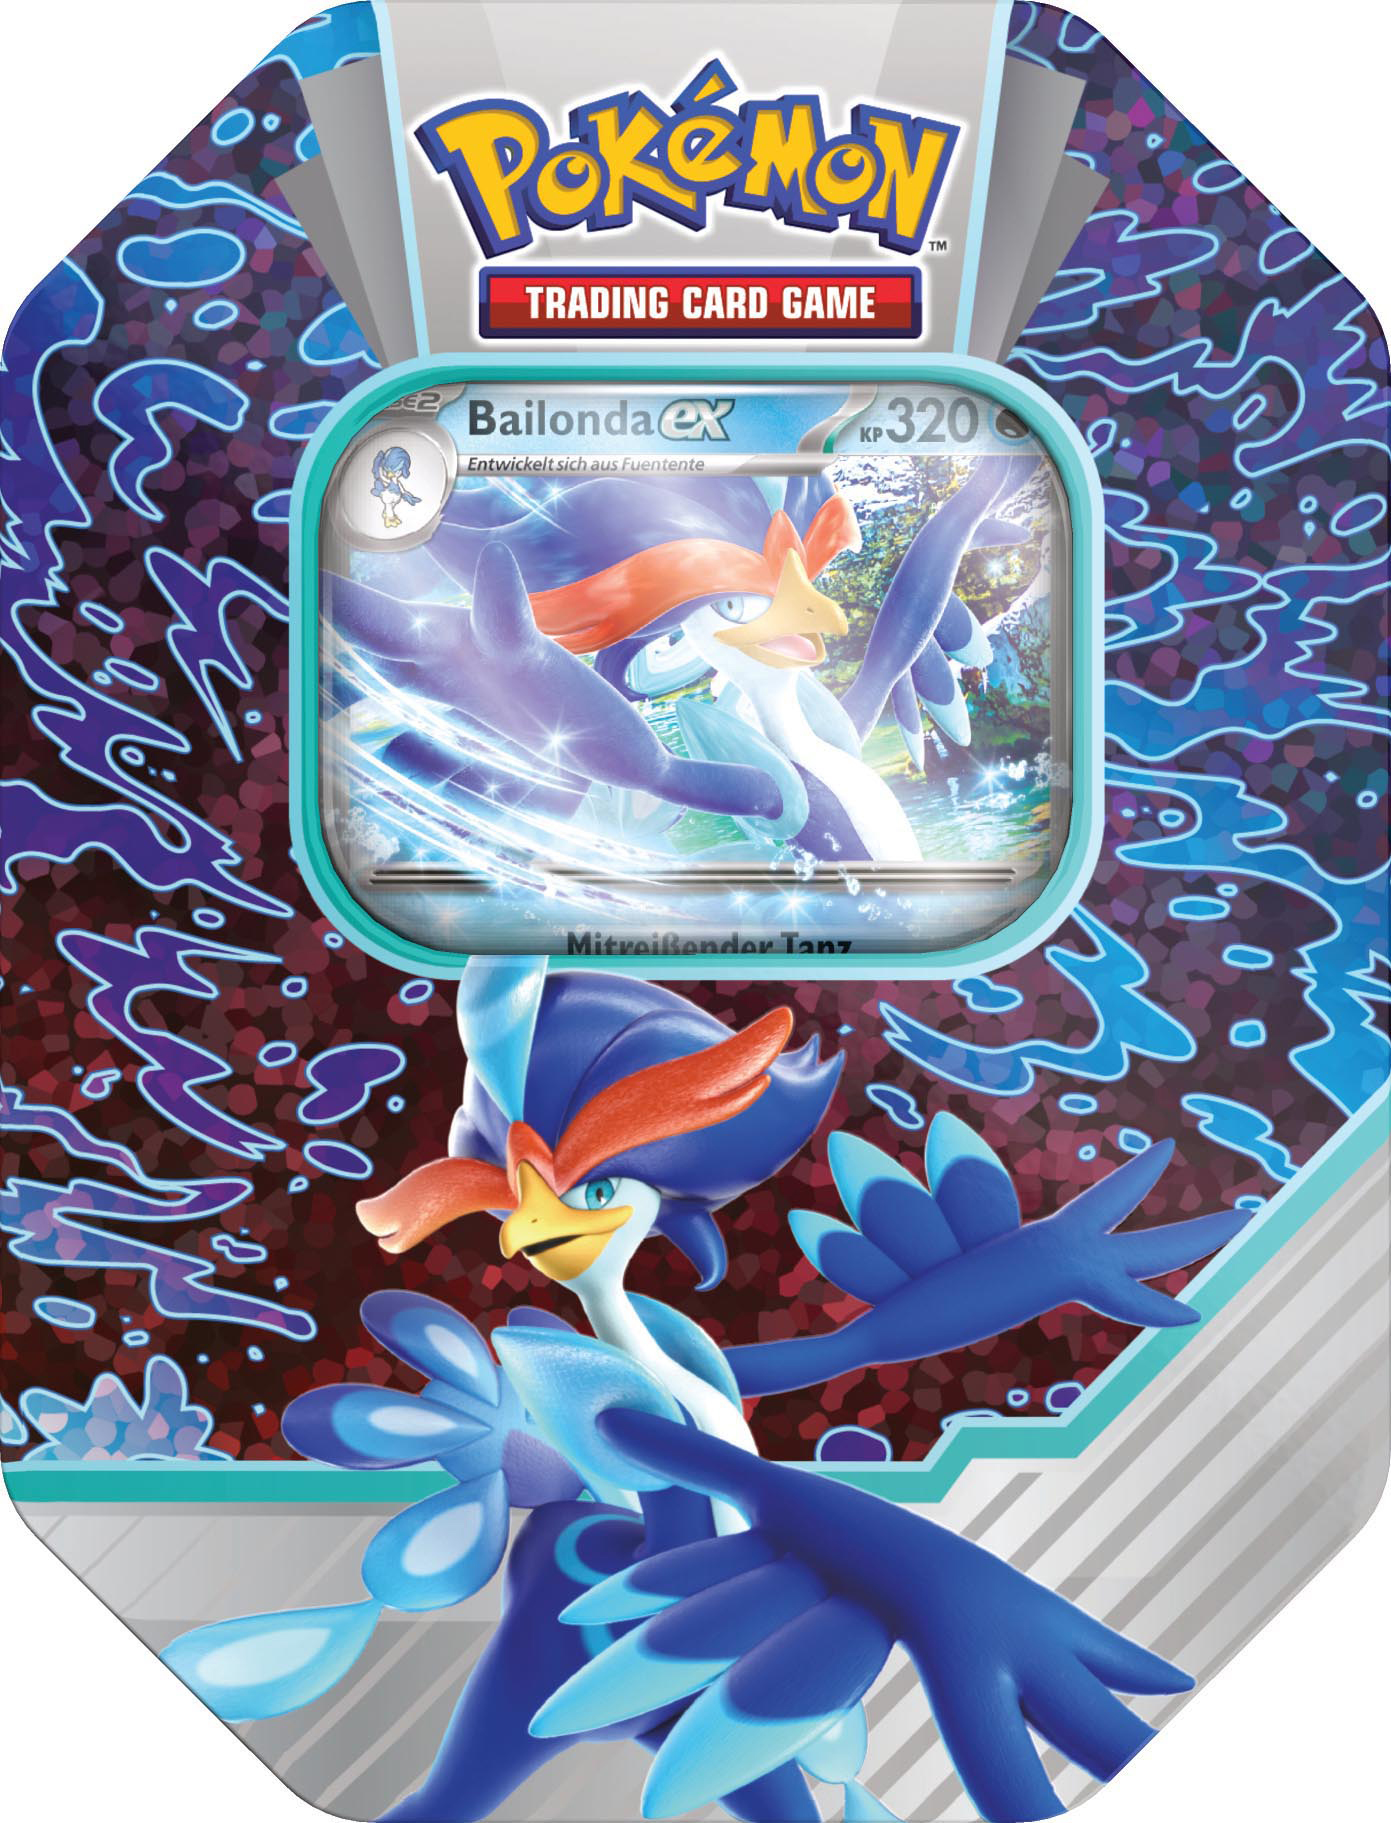 THE POKEMON INT. Pokémon 111 Tin Sammelkarten COMPANY 45547